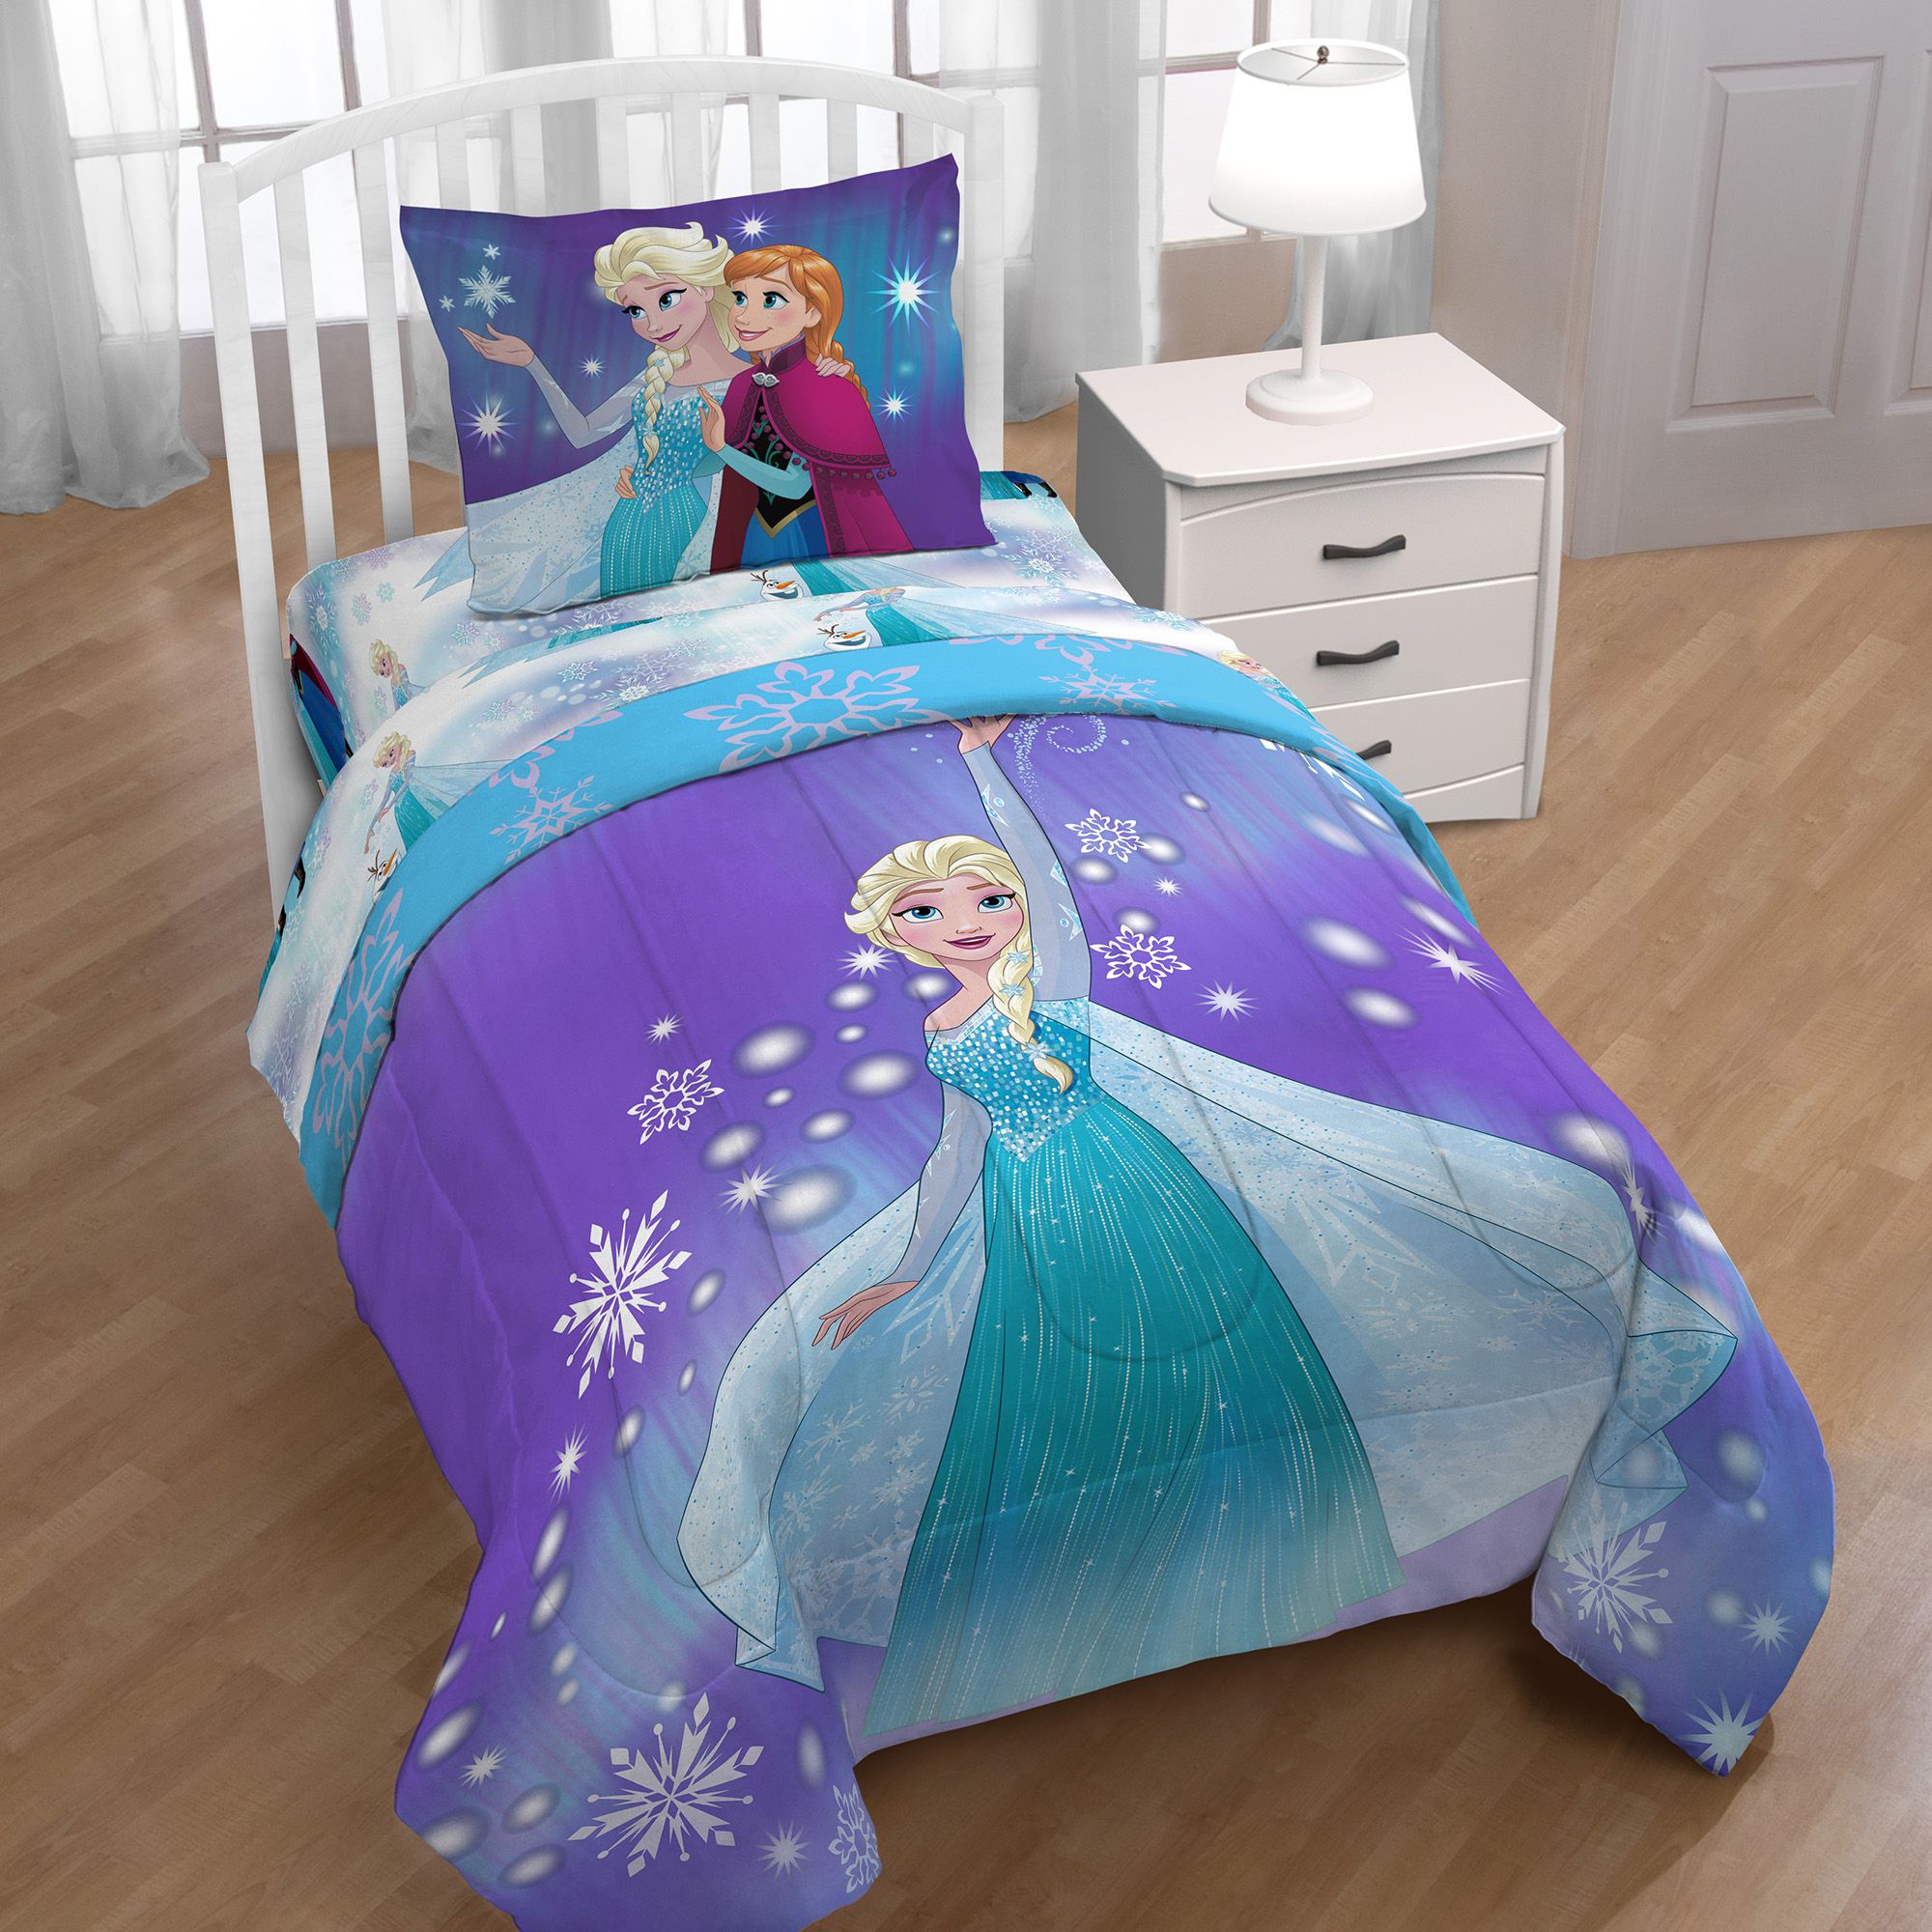 Kids Furniture Room Decor Disney Frozen Magical Winter 4